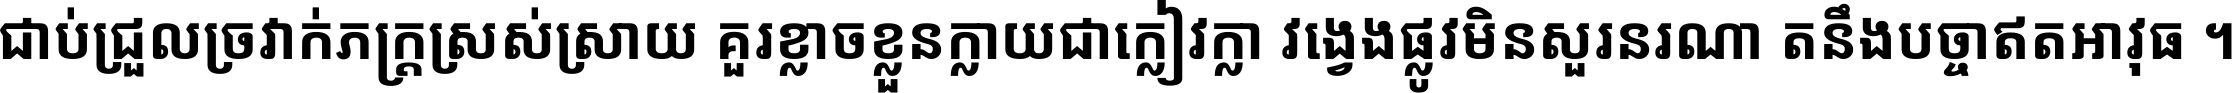 Noto Sans Khmer SemiCondensed Bold